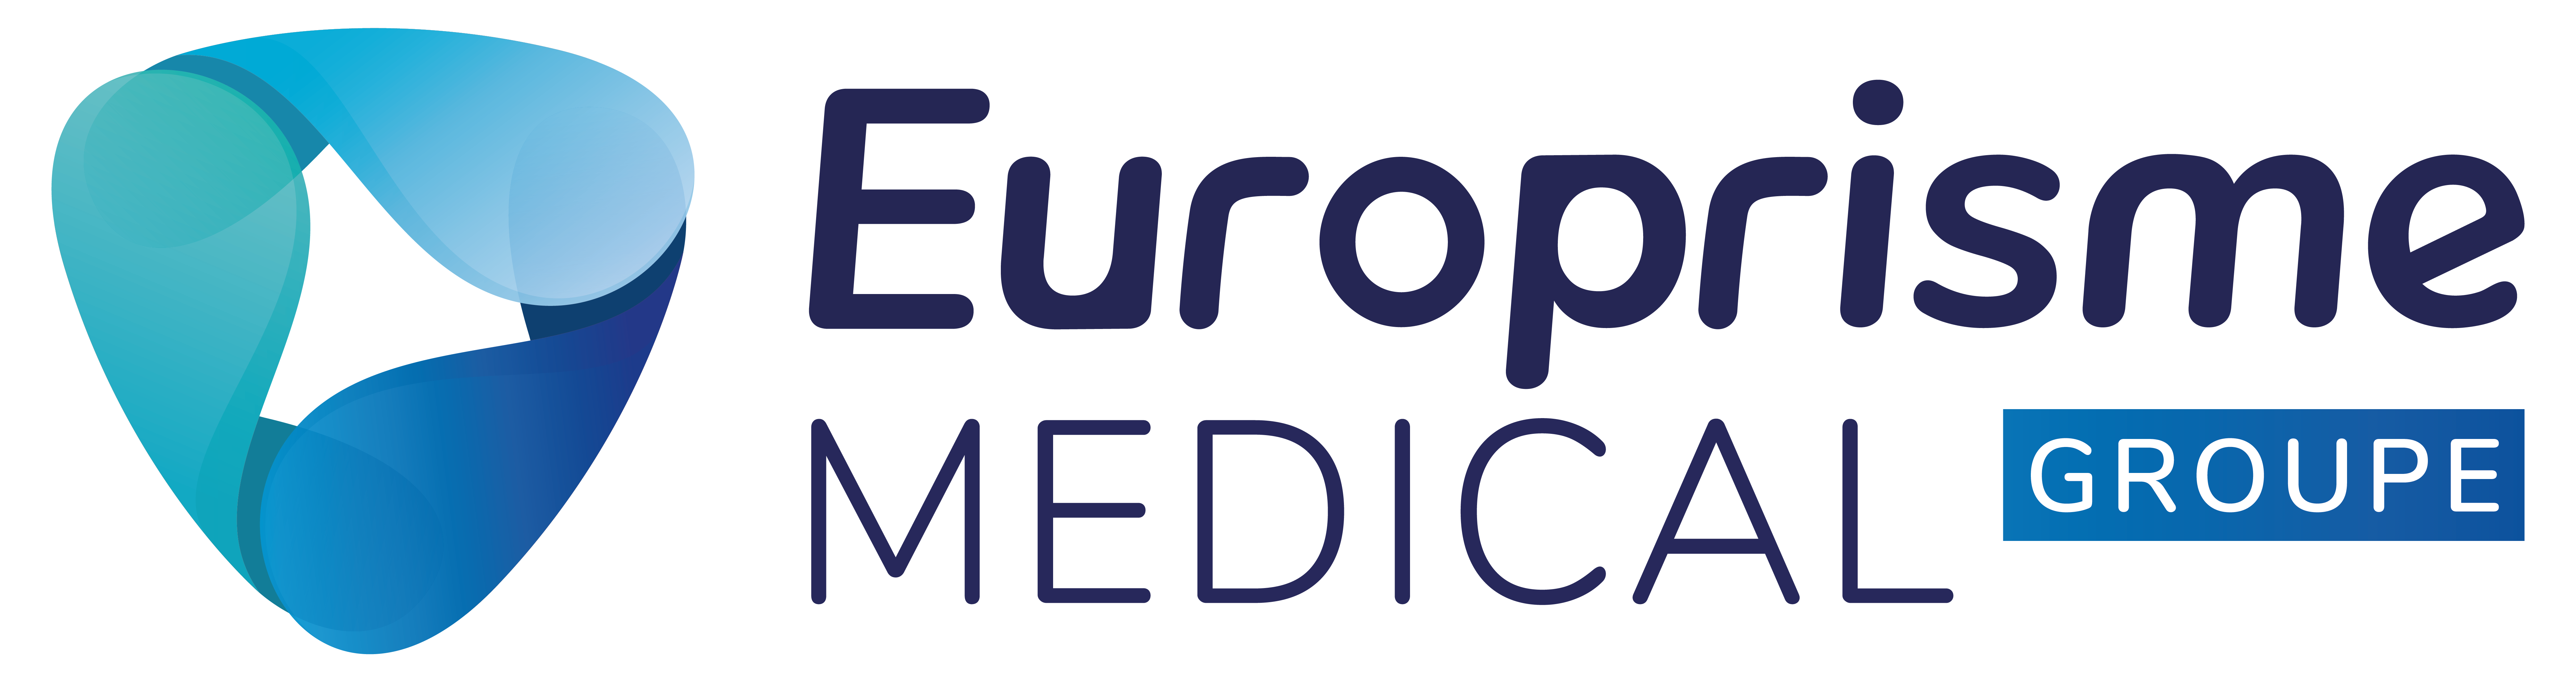 Europrisme Médical Groupe